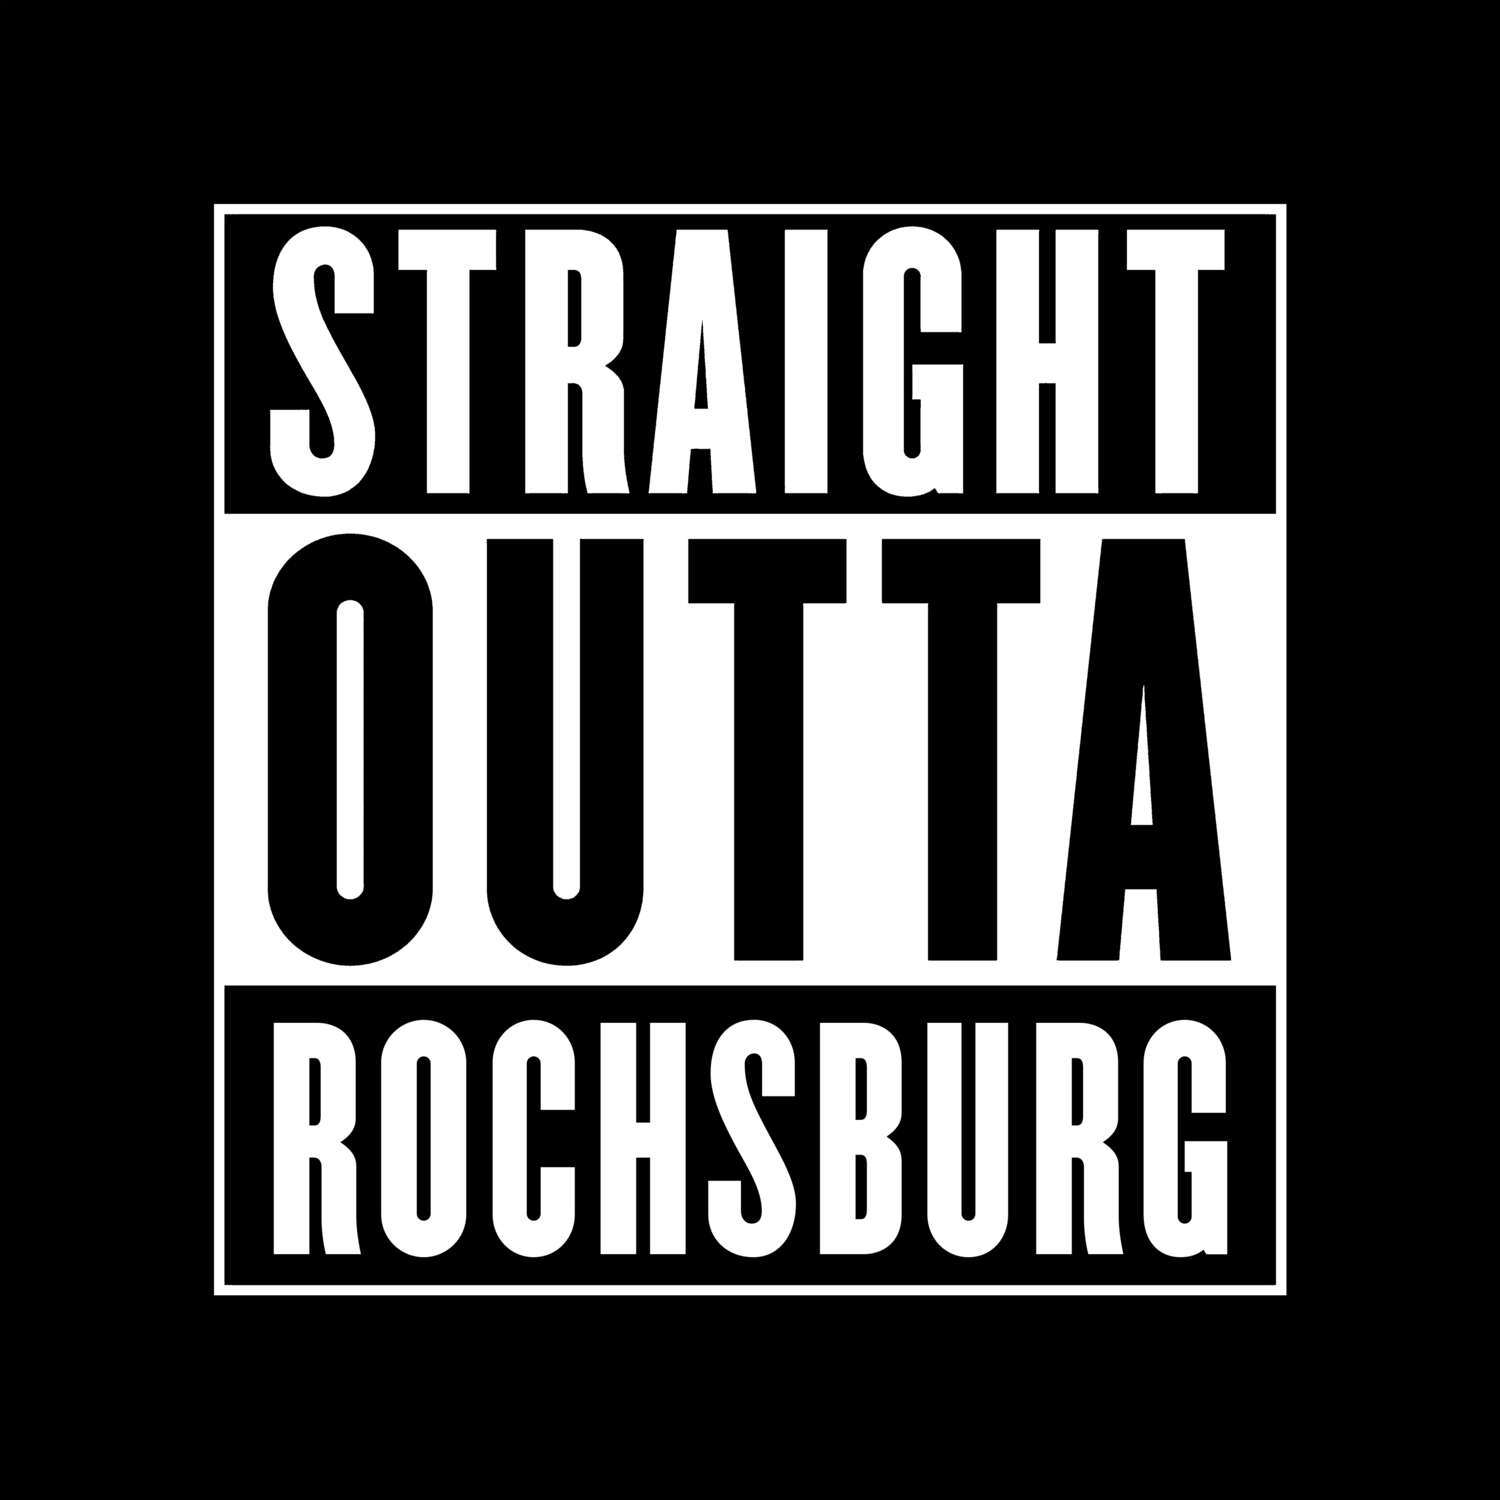 Rochsburg T-Shirt »Straight Outta«